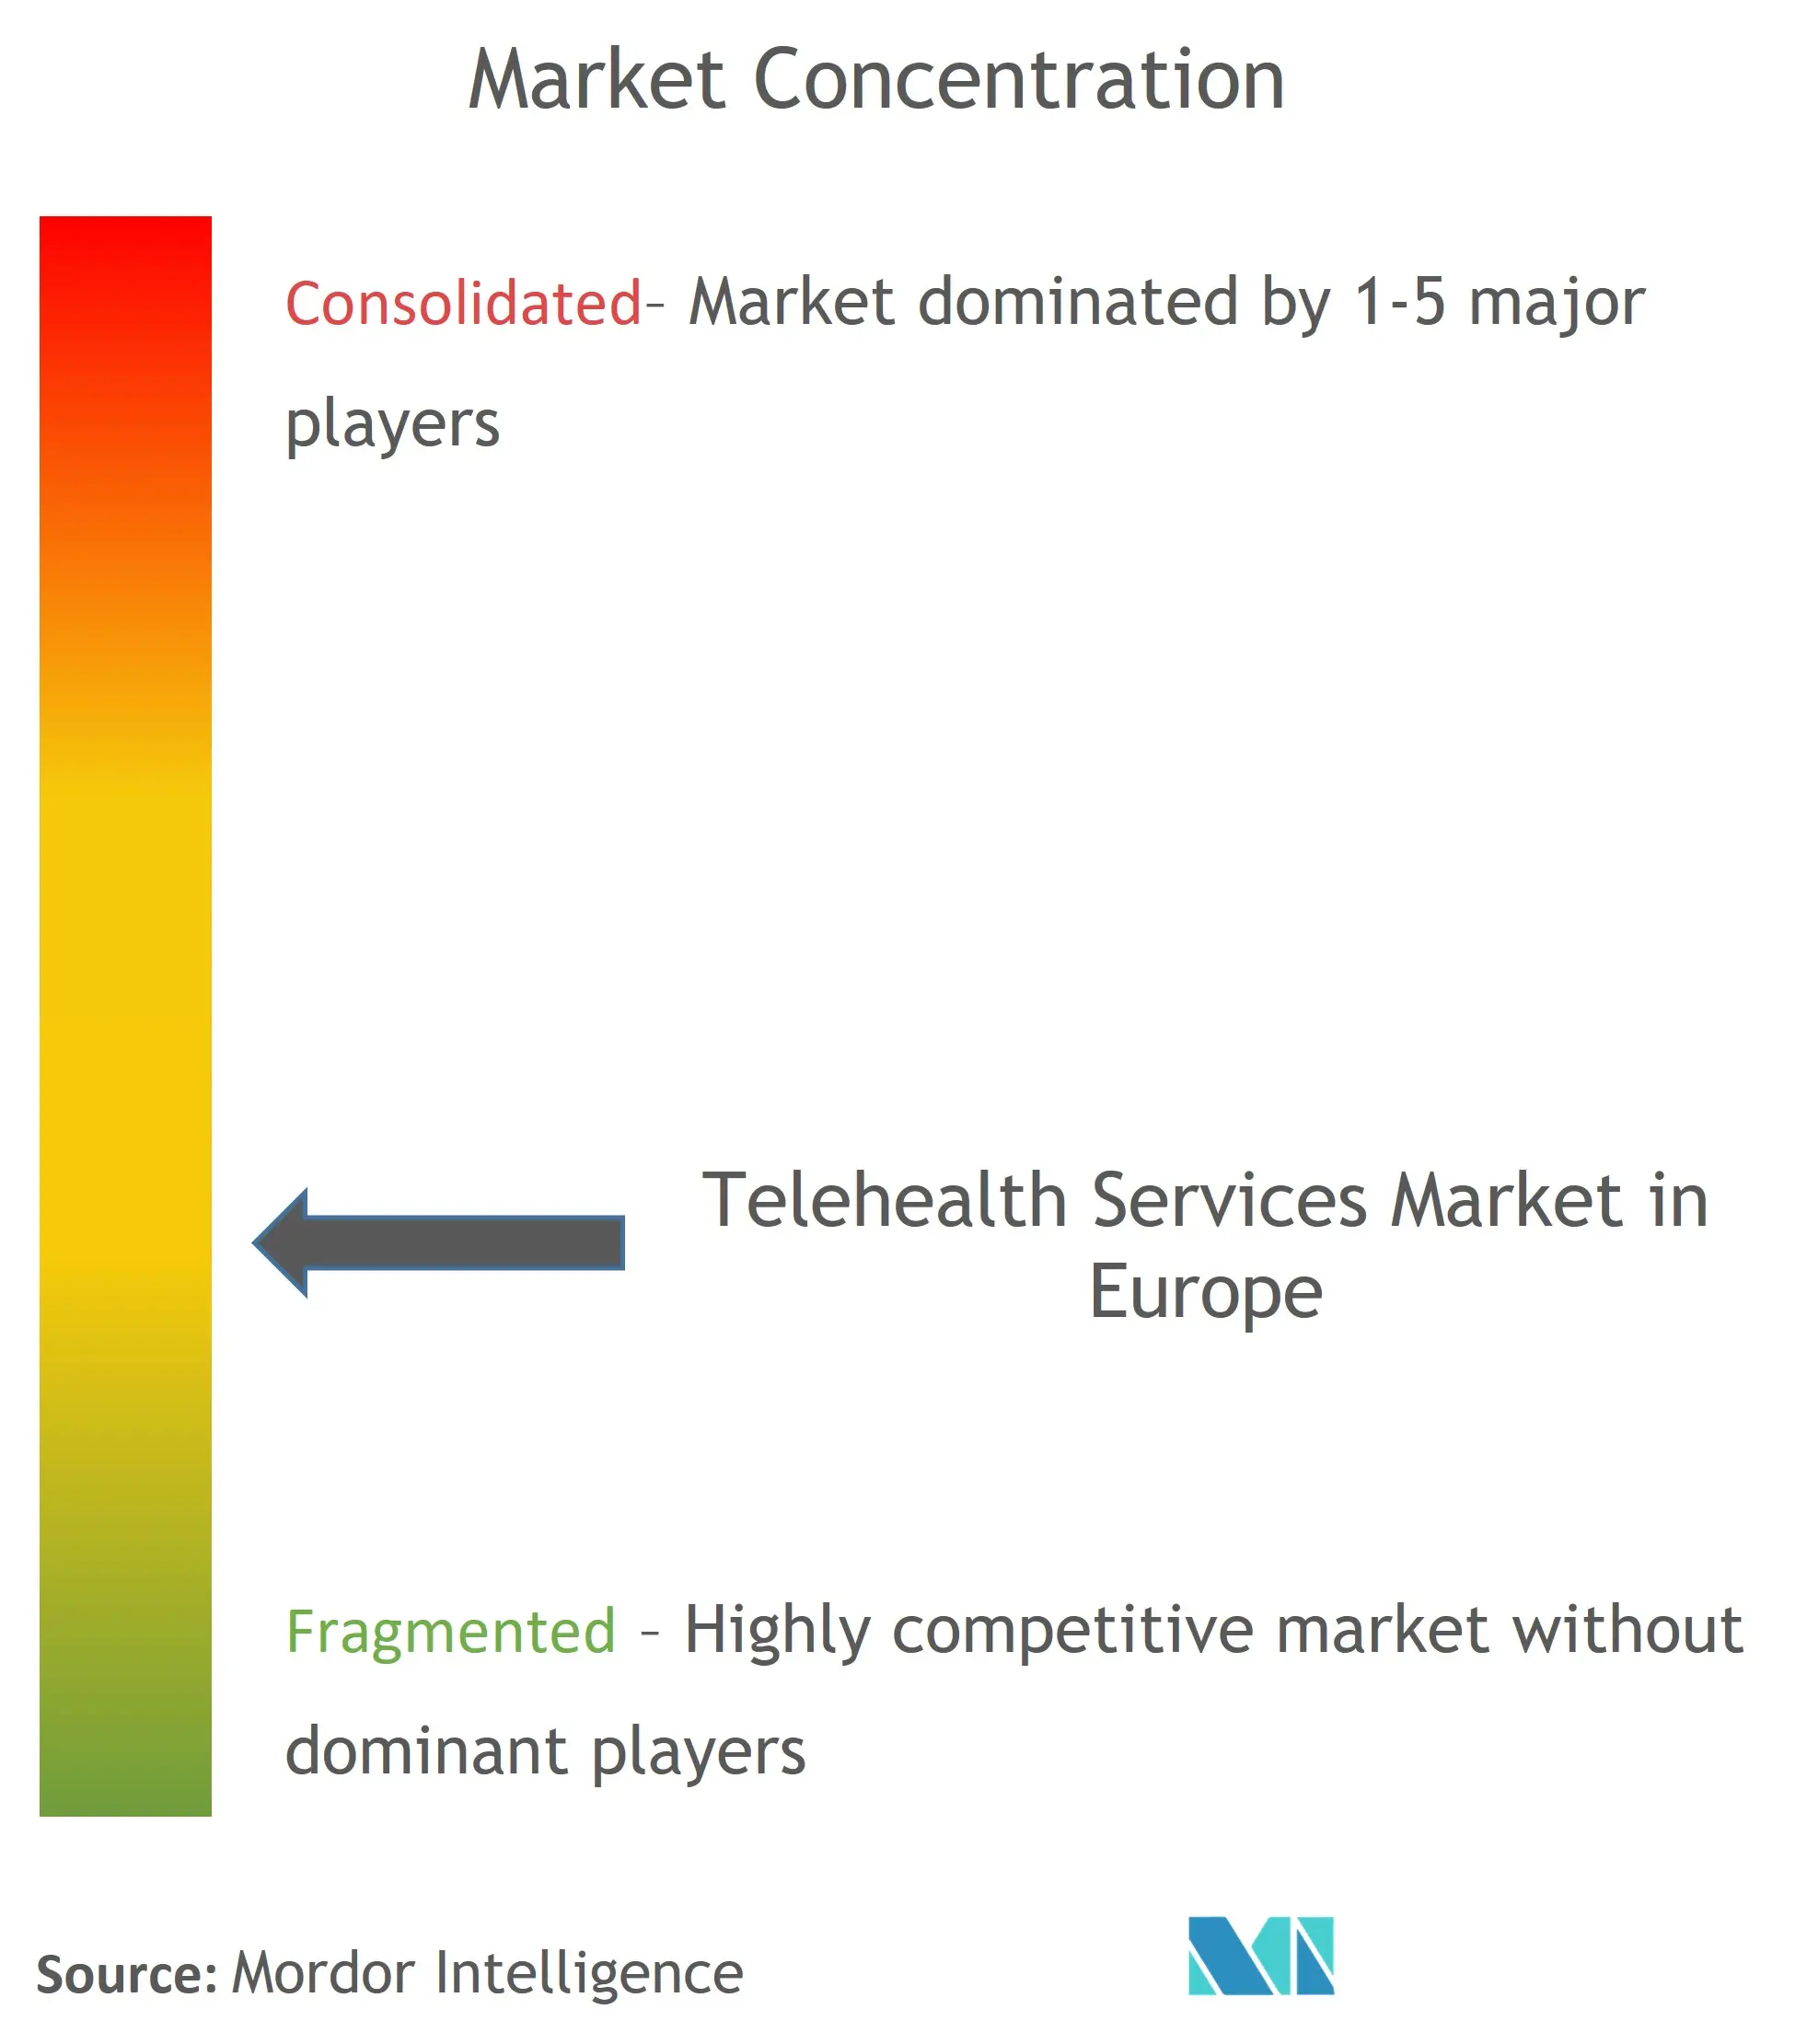 Telehealth Services Market Concentration